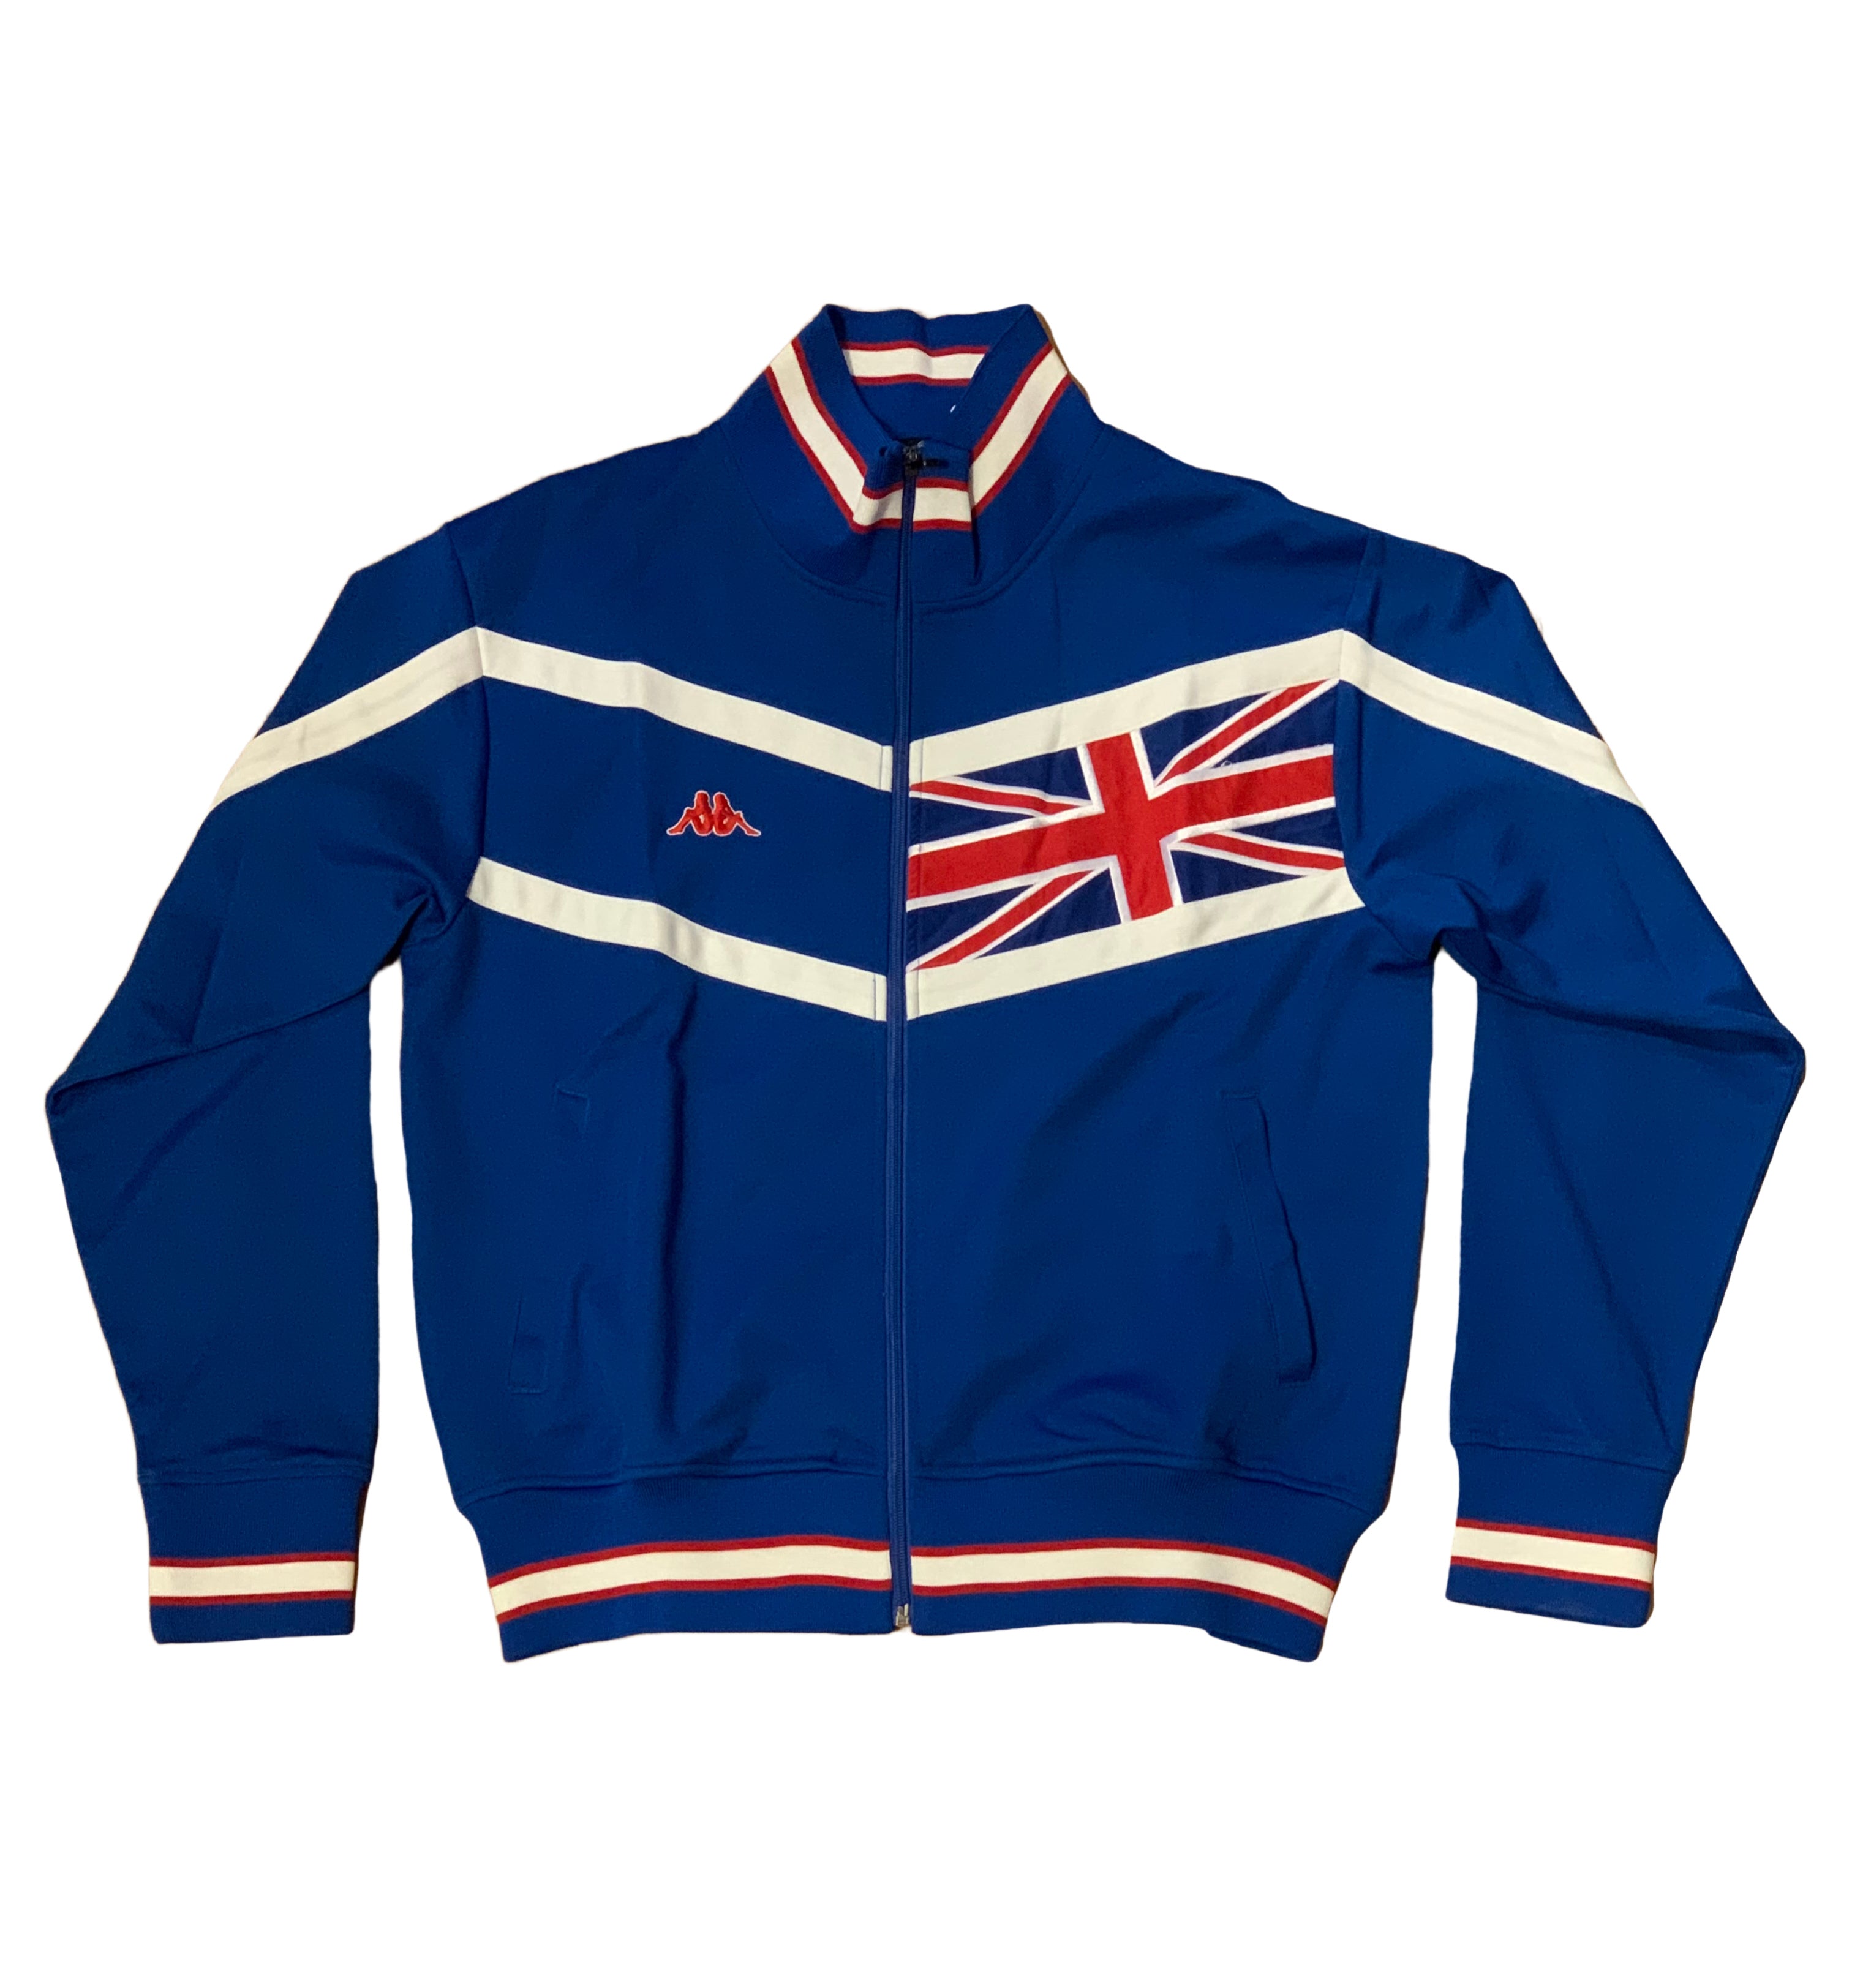 Kappa Men's England Track Jacket - Blue/Red